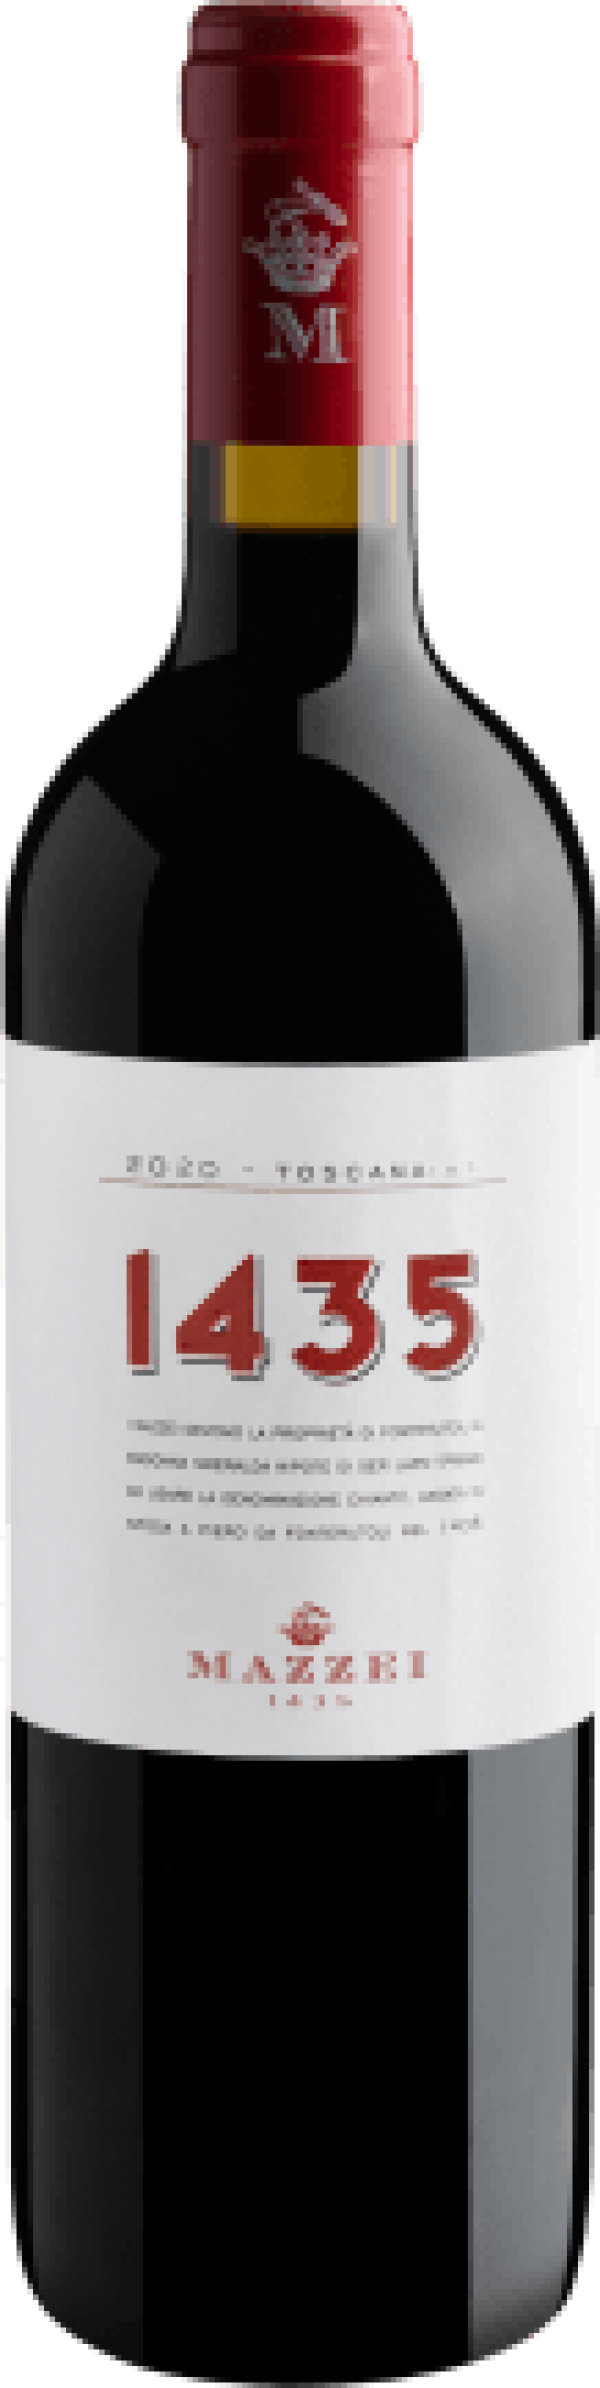 1435 Toscana IGT 2020